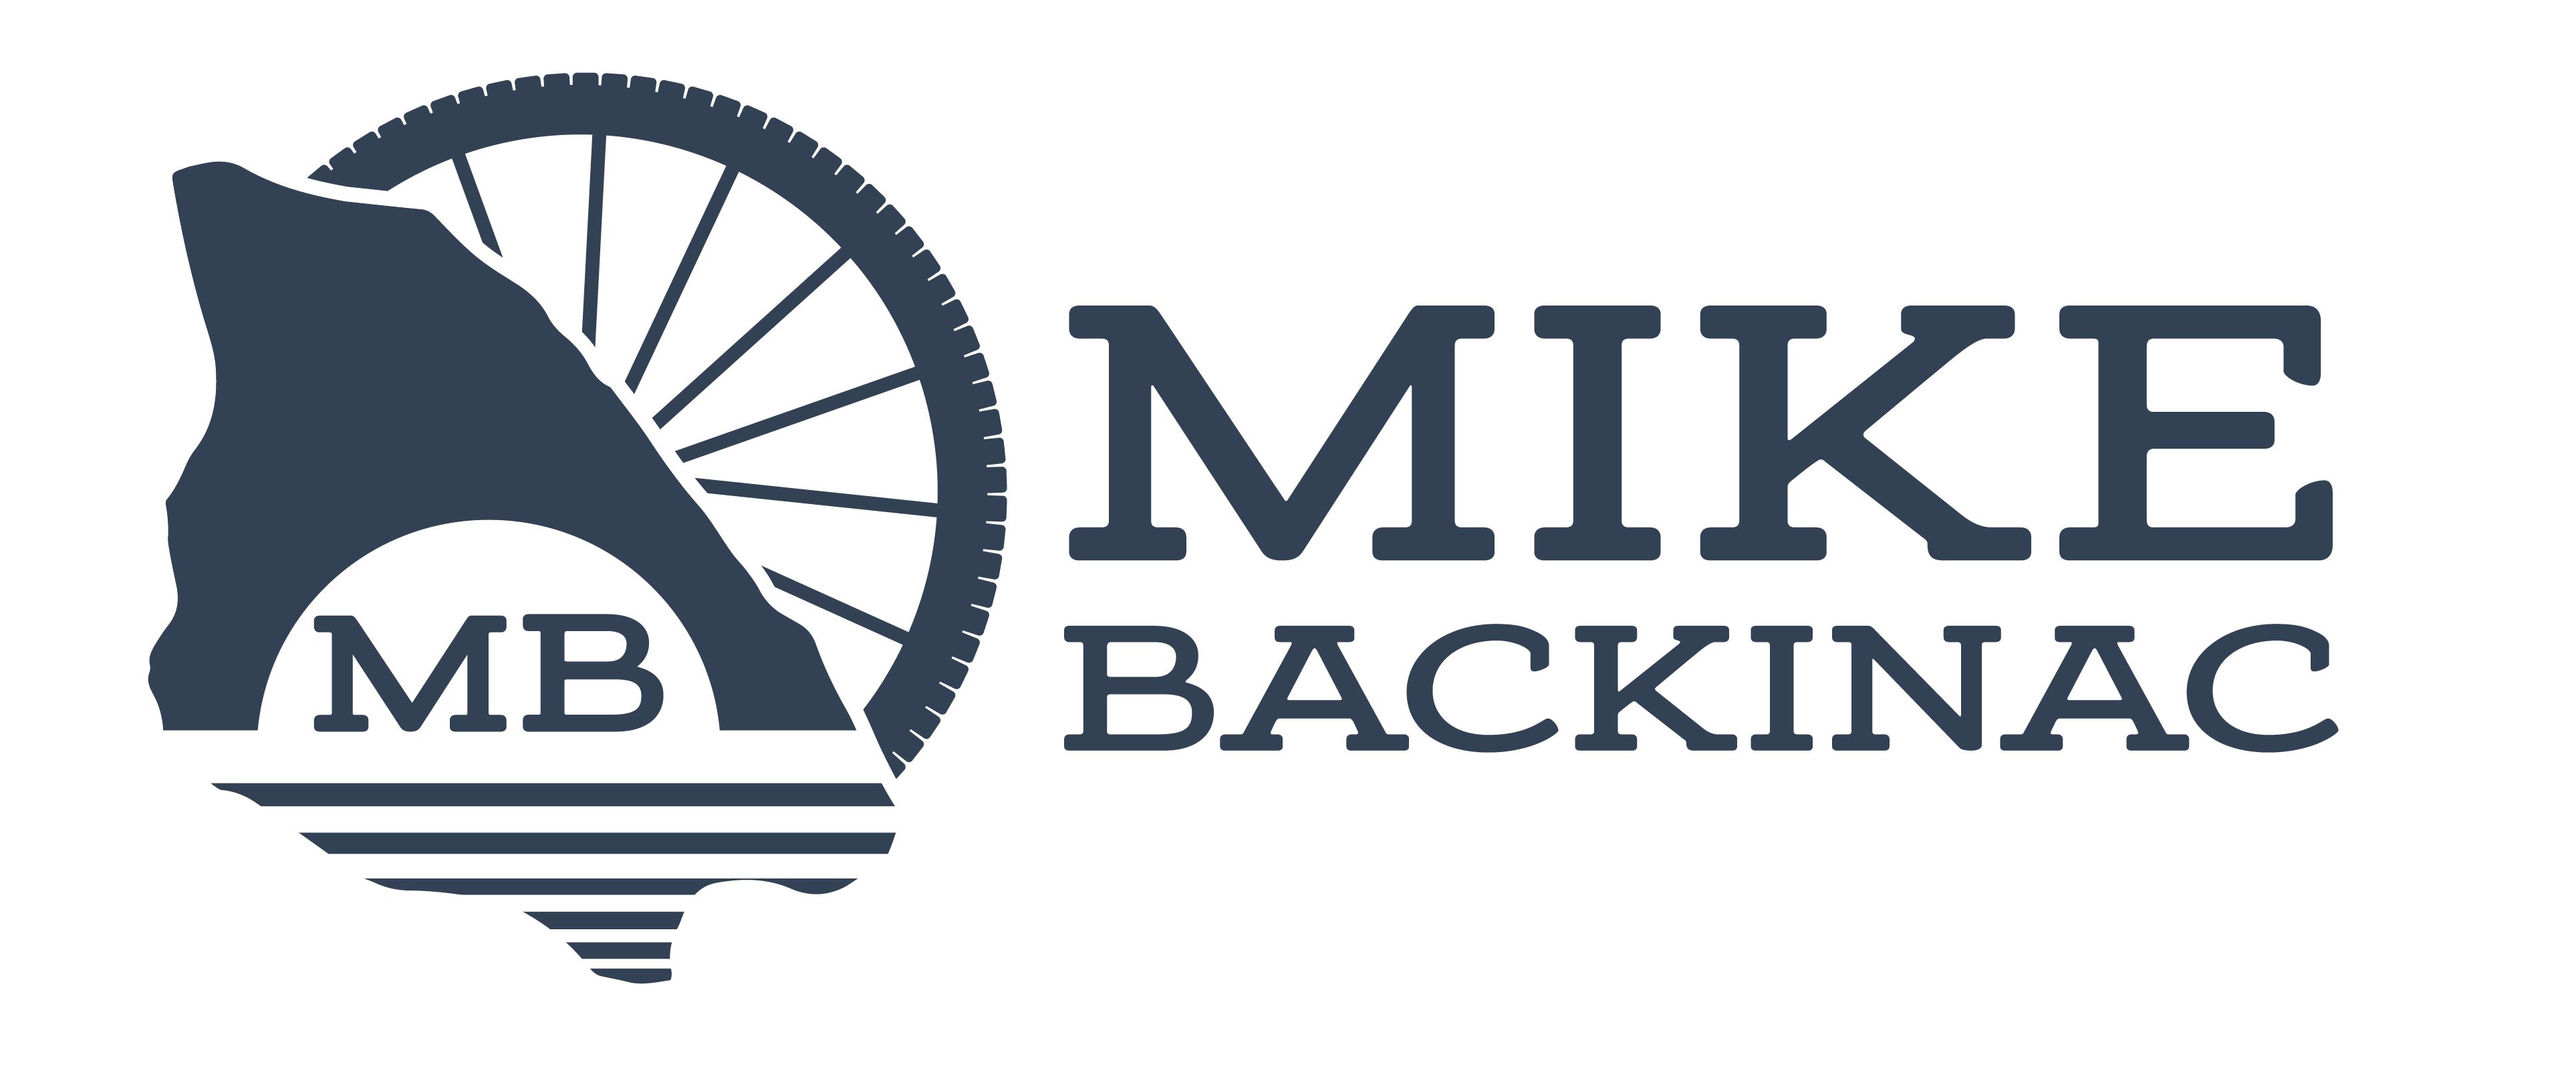 Mike Backinac nav logo featuring island outline and bike wheel